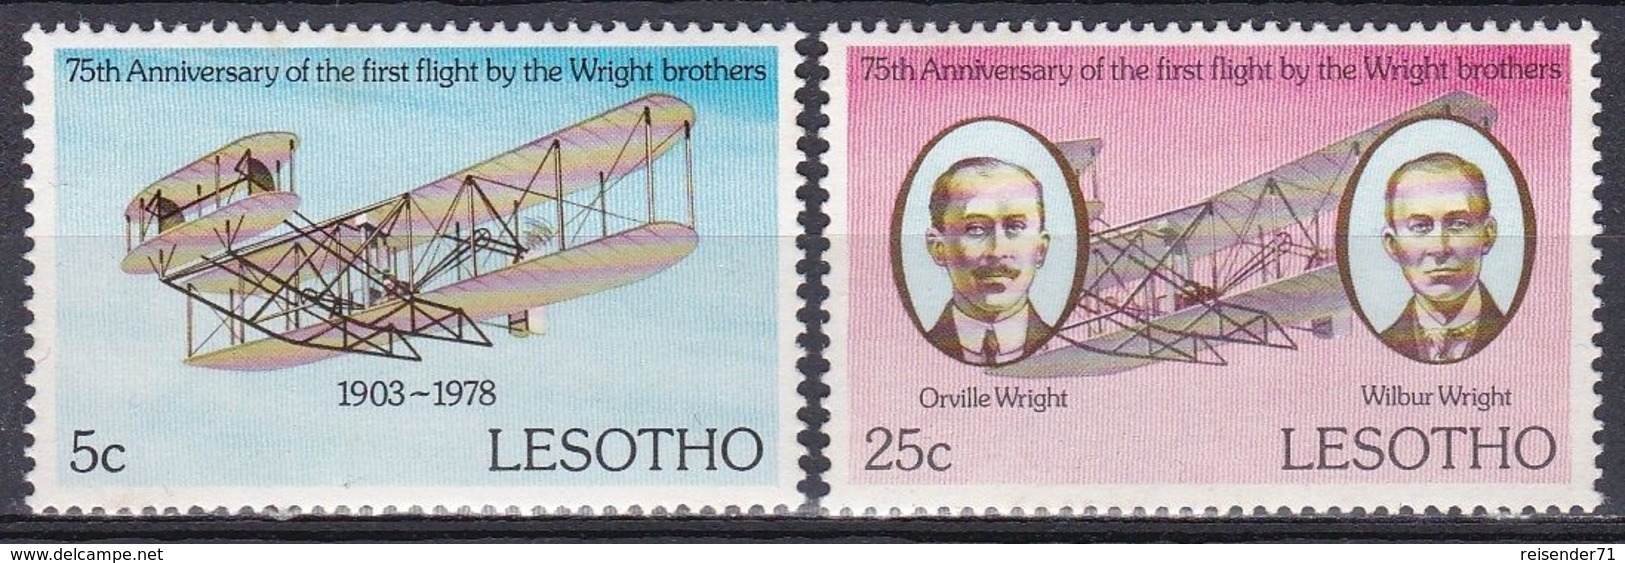 Lesotho 1978 Transport Luftfahrt Aviation Flugzeuge Aeroplanes Planes Erfindungen Inventions Wright, Mi. 260-1 ** - Lesotho (1966-...)